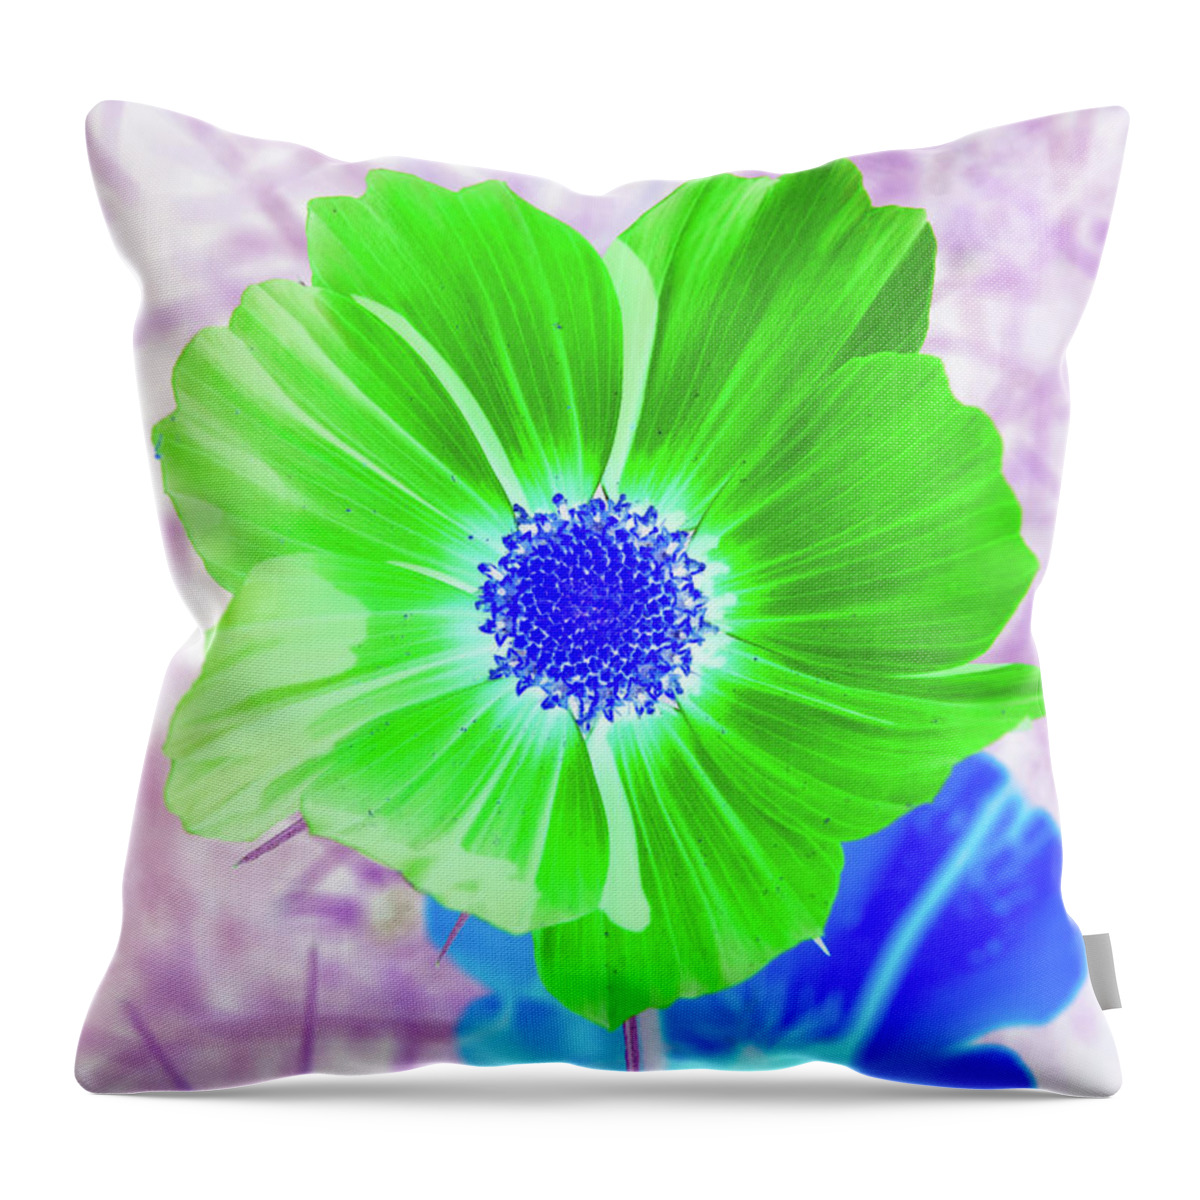 Lavender Throw Pillow featuring the digital art Green Flower On Purple by David Desautel